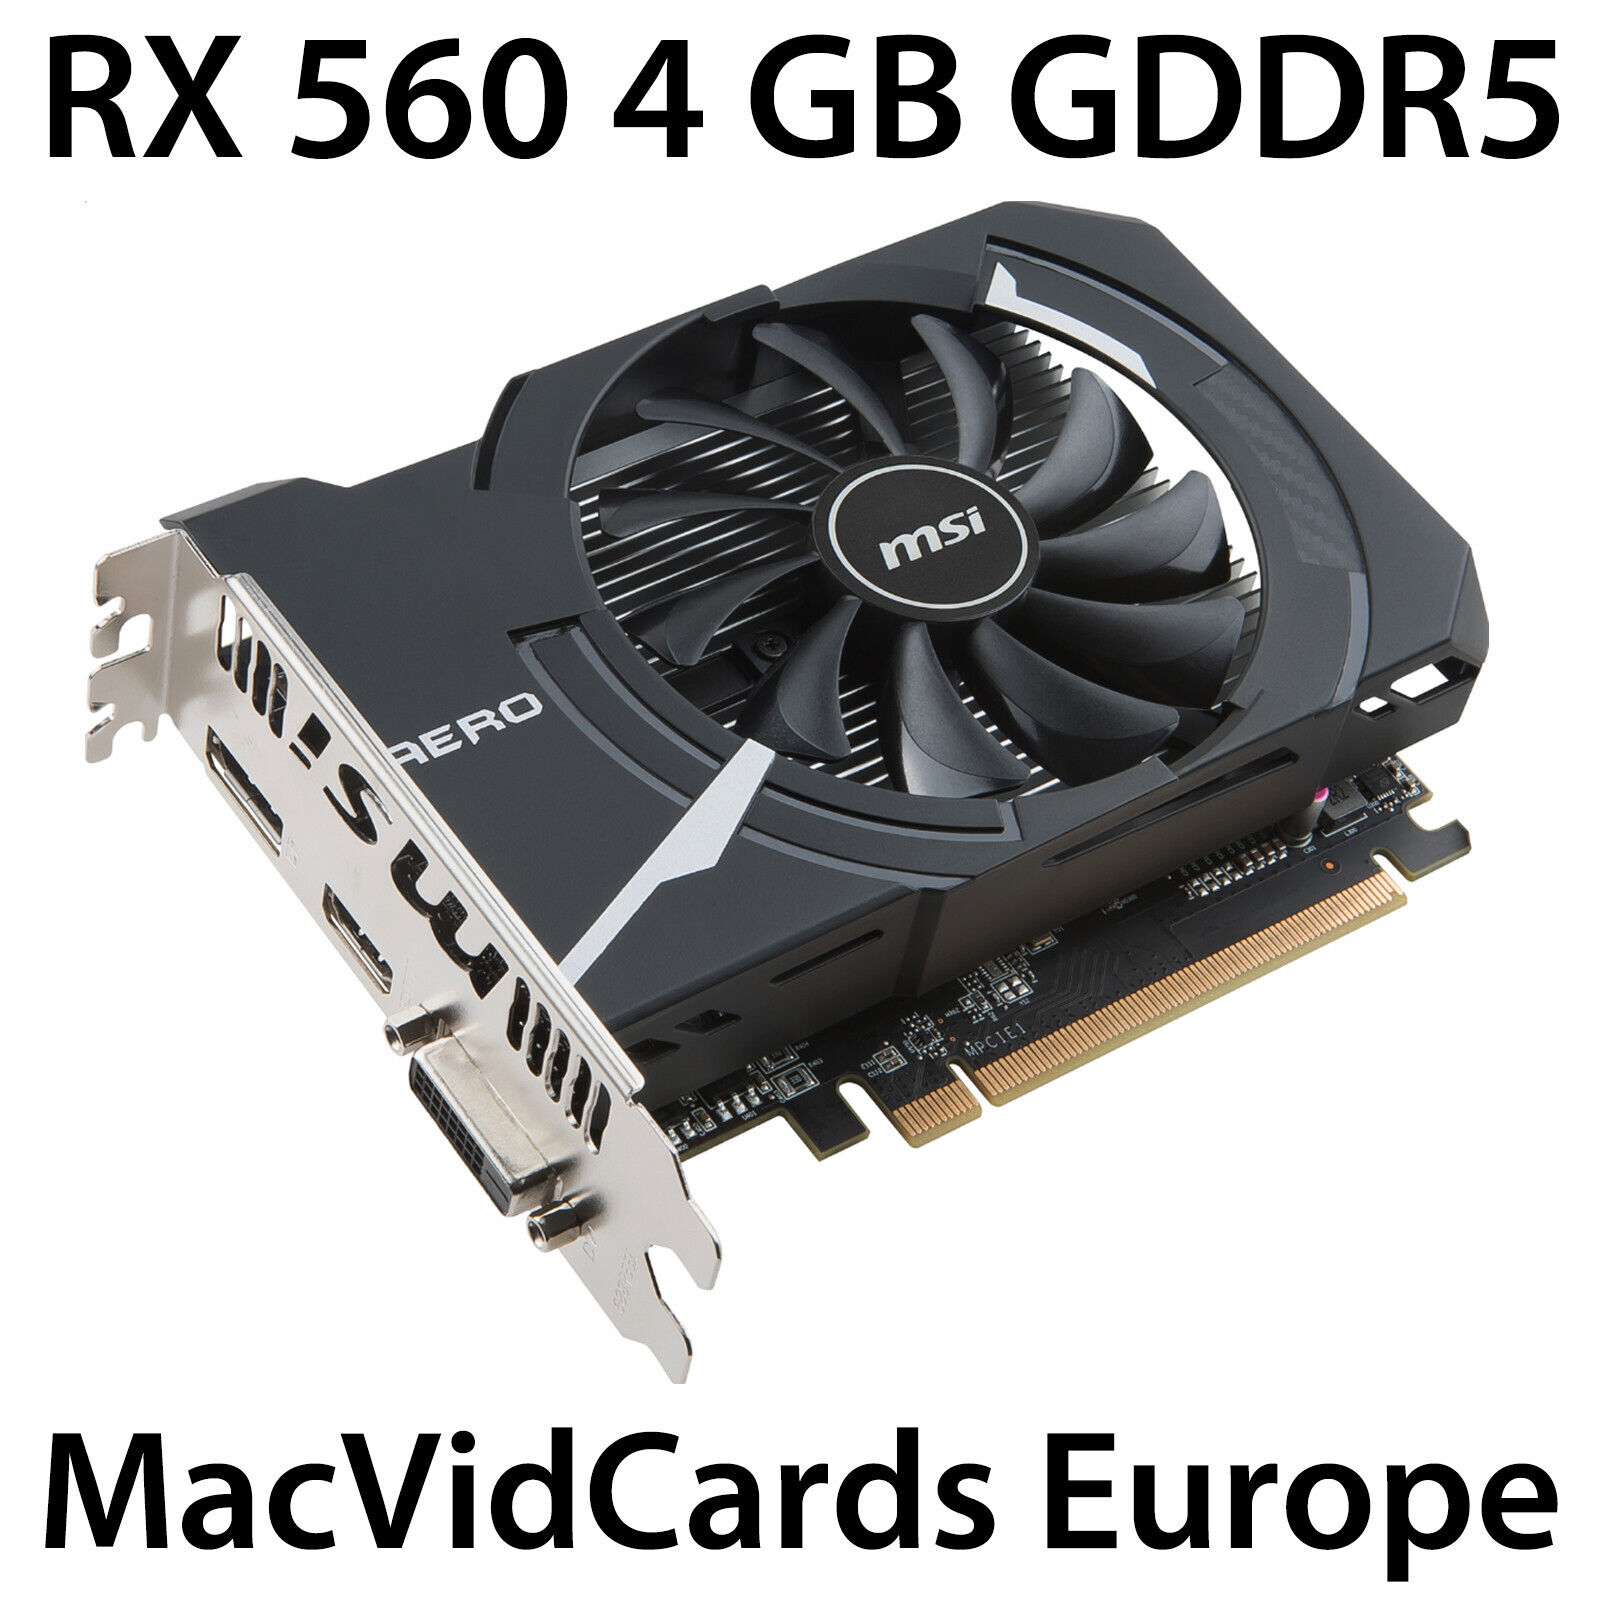 MacVidCards AMD Radeon RX560 4 GB GDDR5 Video Card for Apple Mac Pro BOOT SCREEN